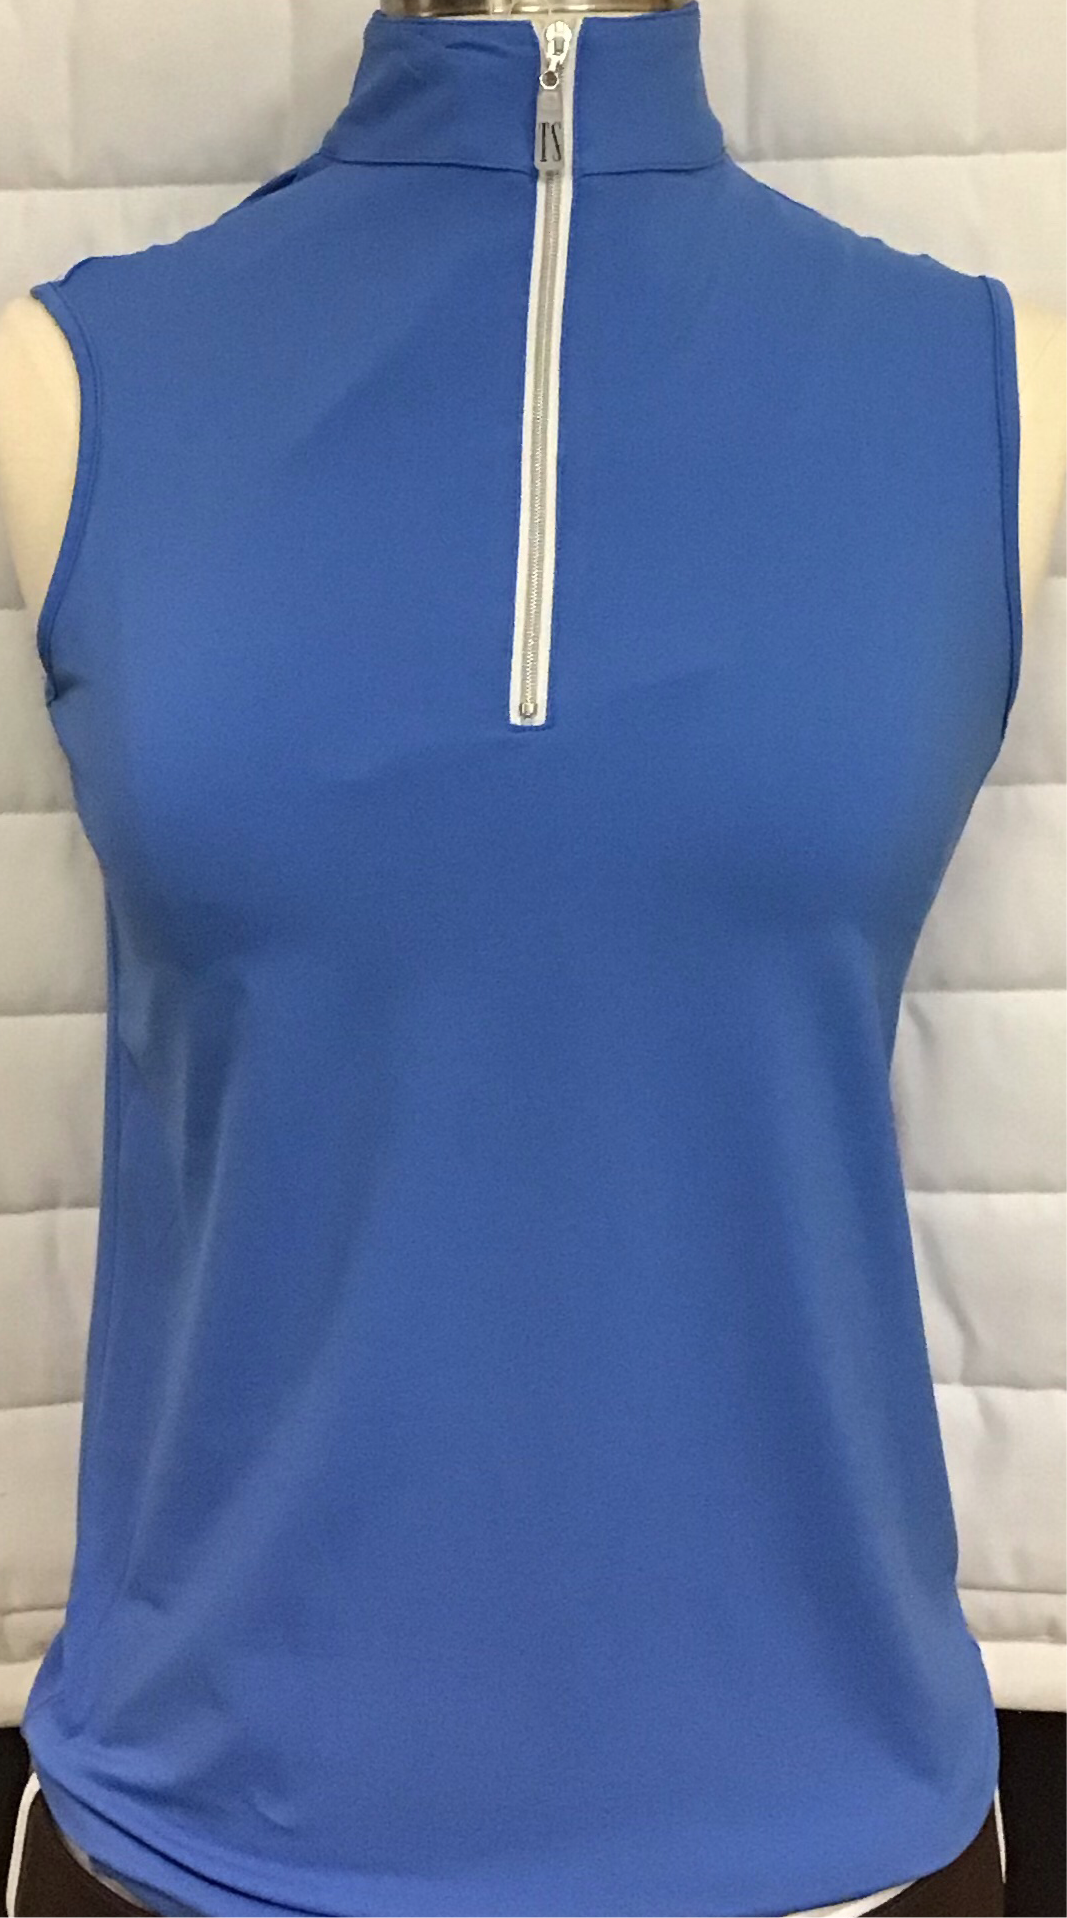 Tailored Sportsman Women's Sleeveless IceFil Shirt